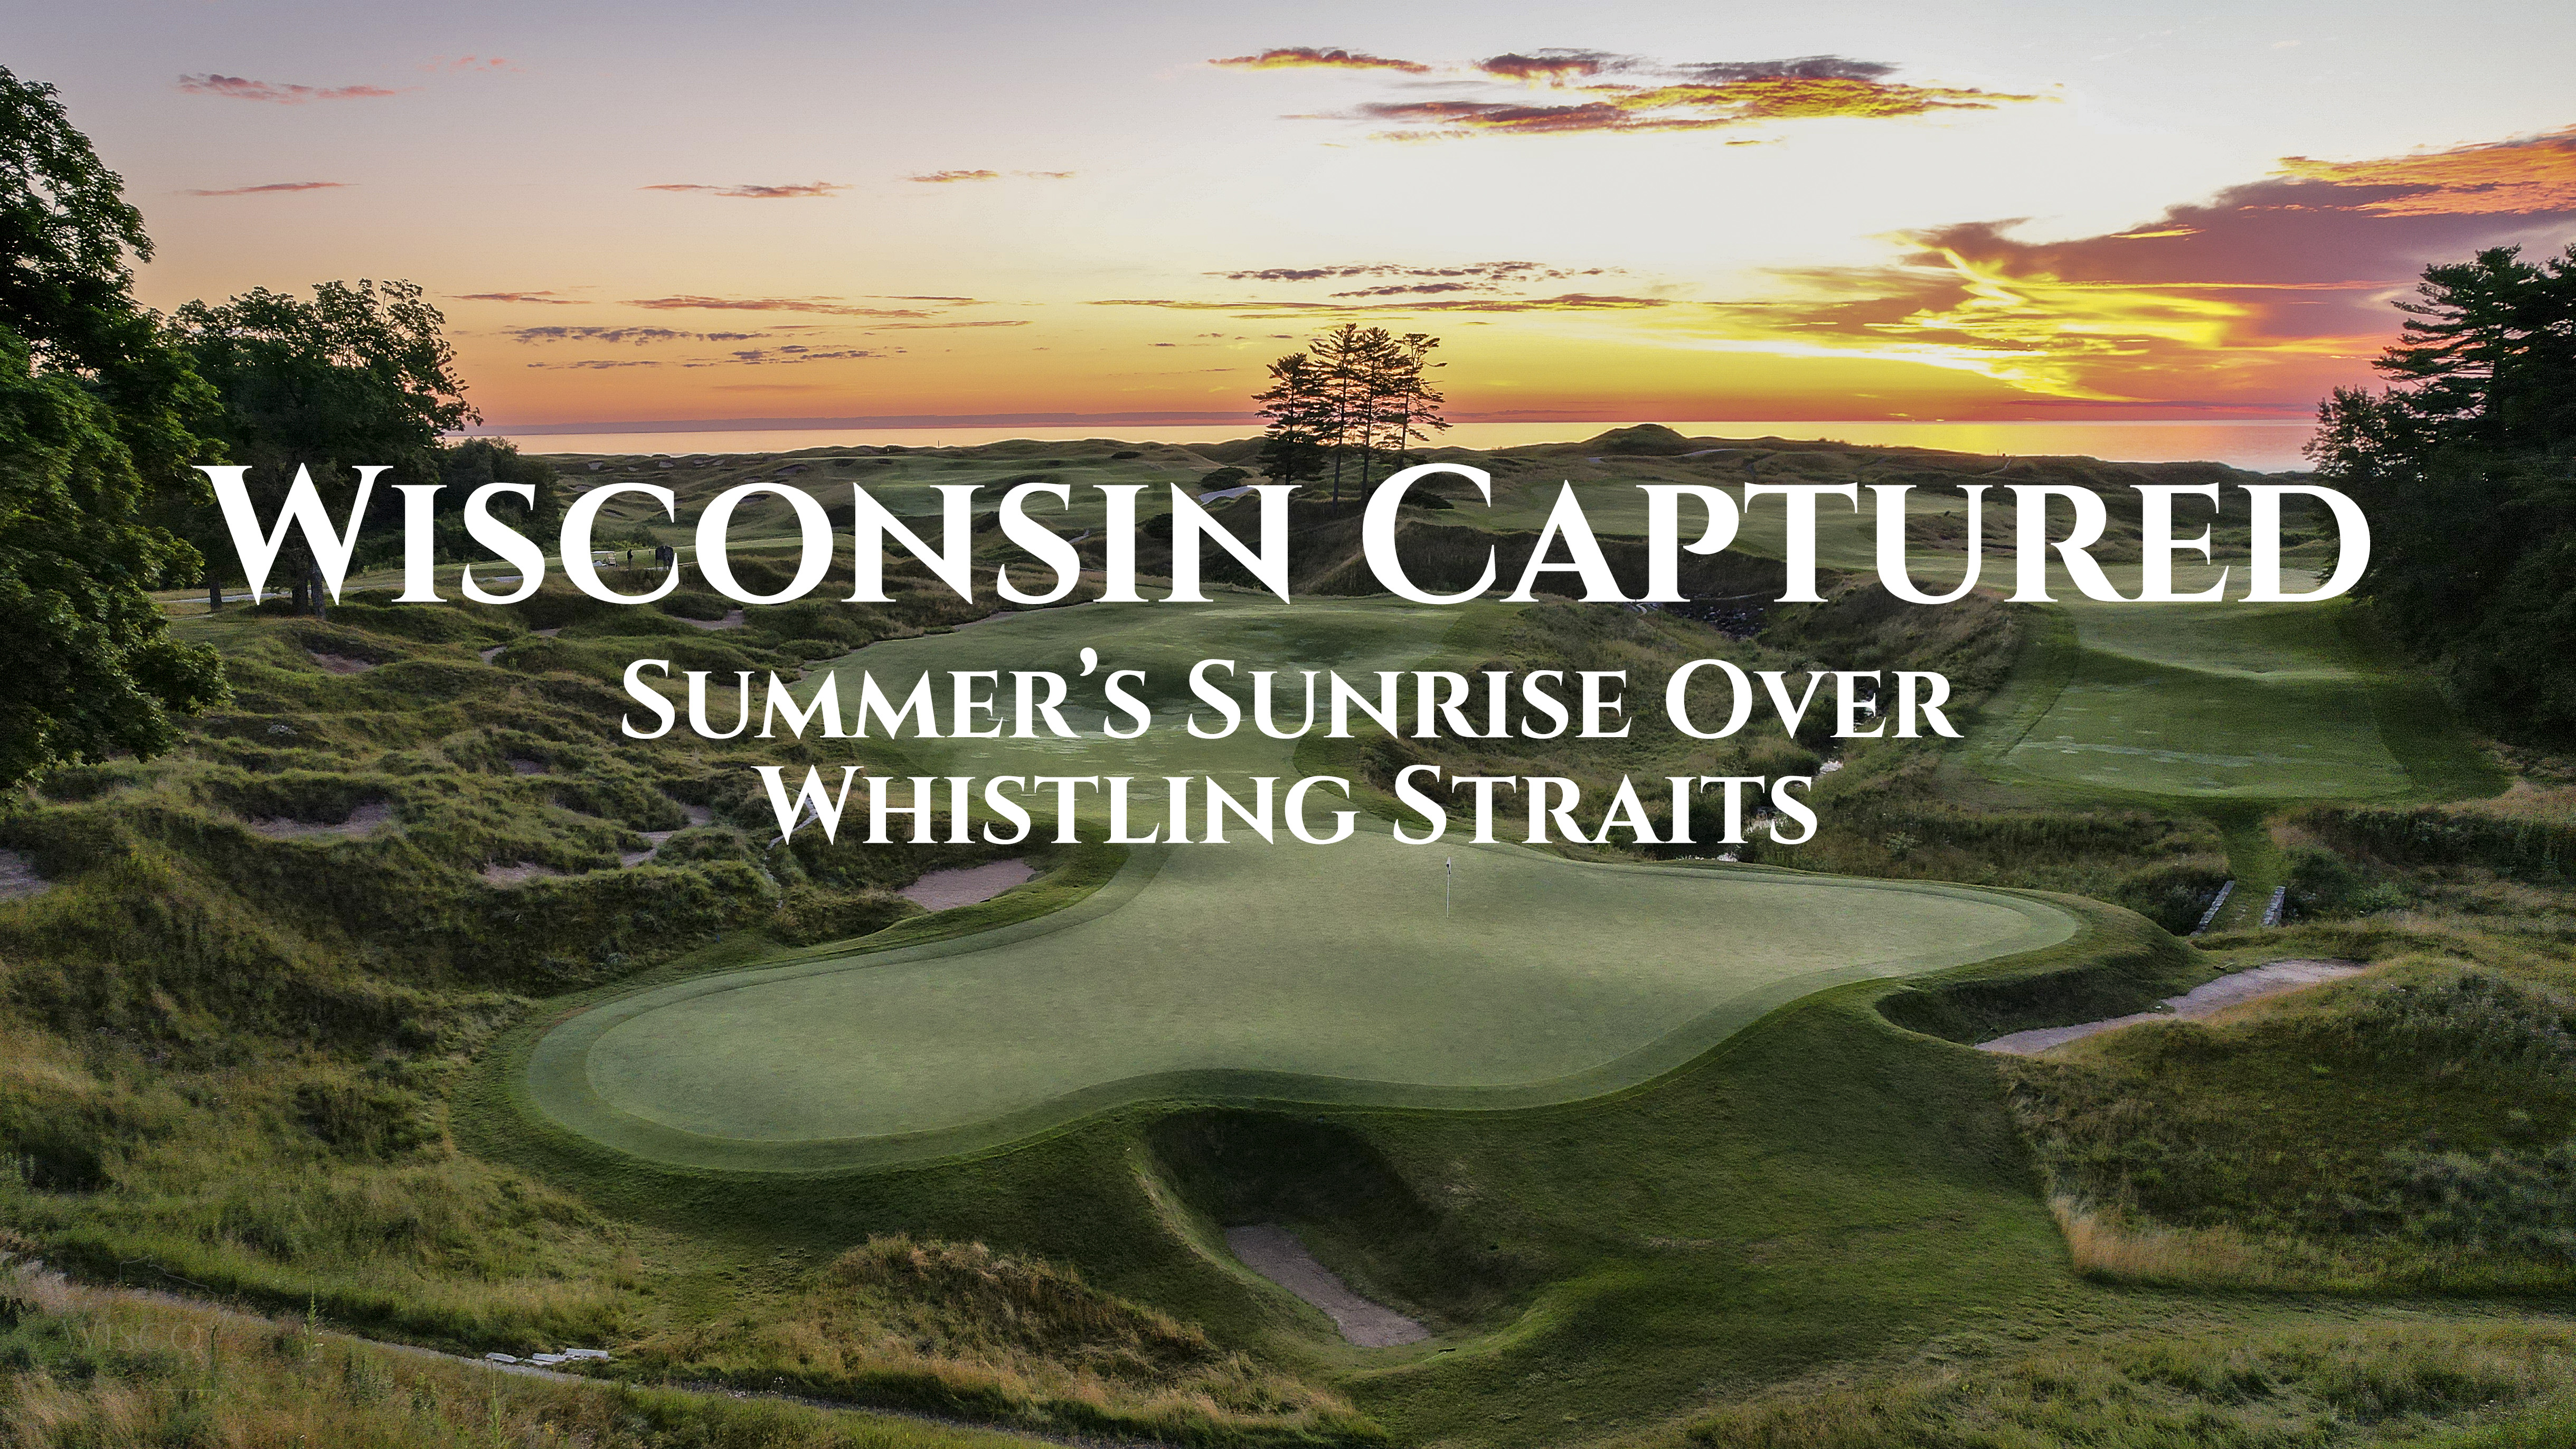 “Wisconsin Captured”: Summer’s Sunrise Over Whistling Straits